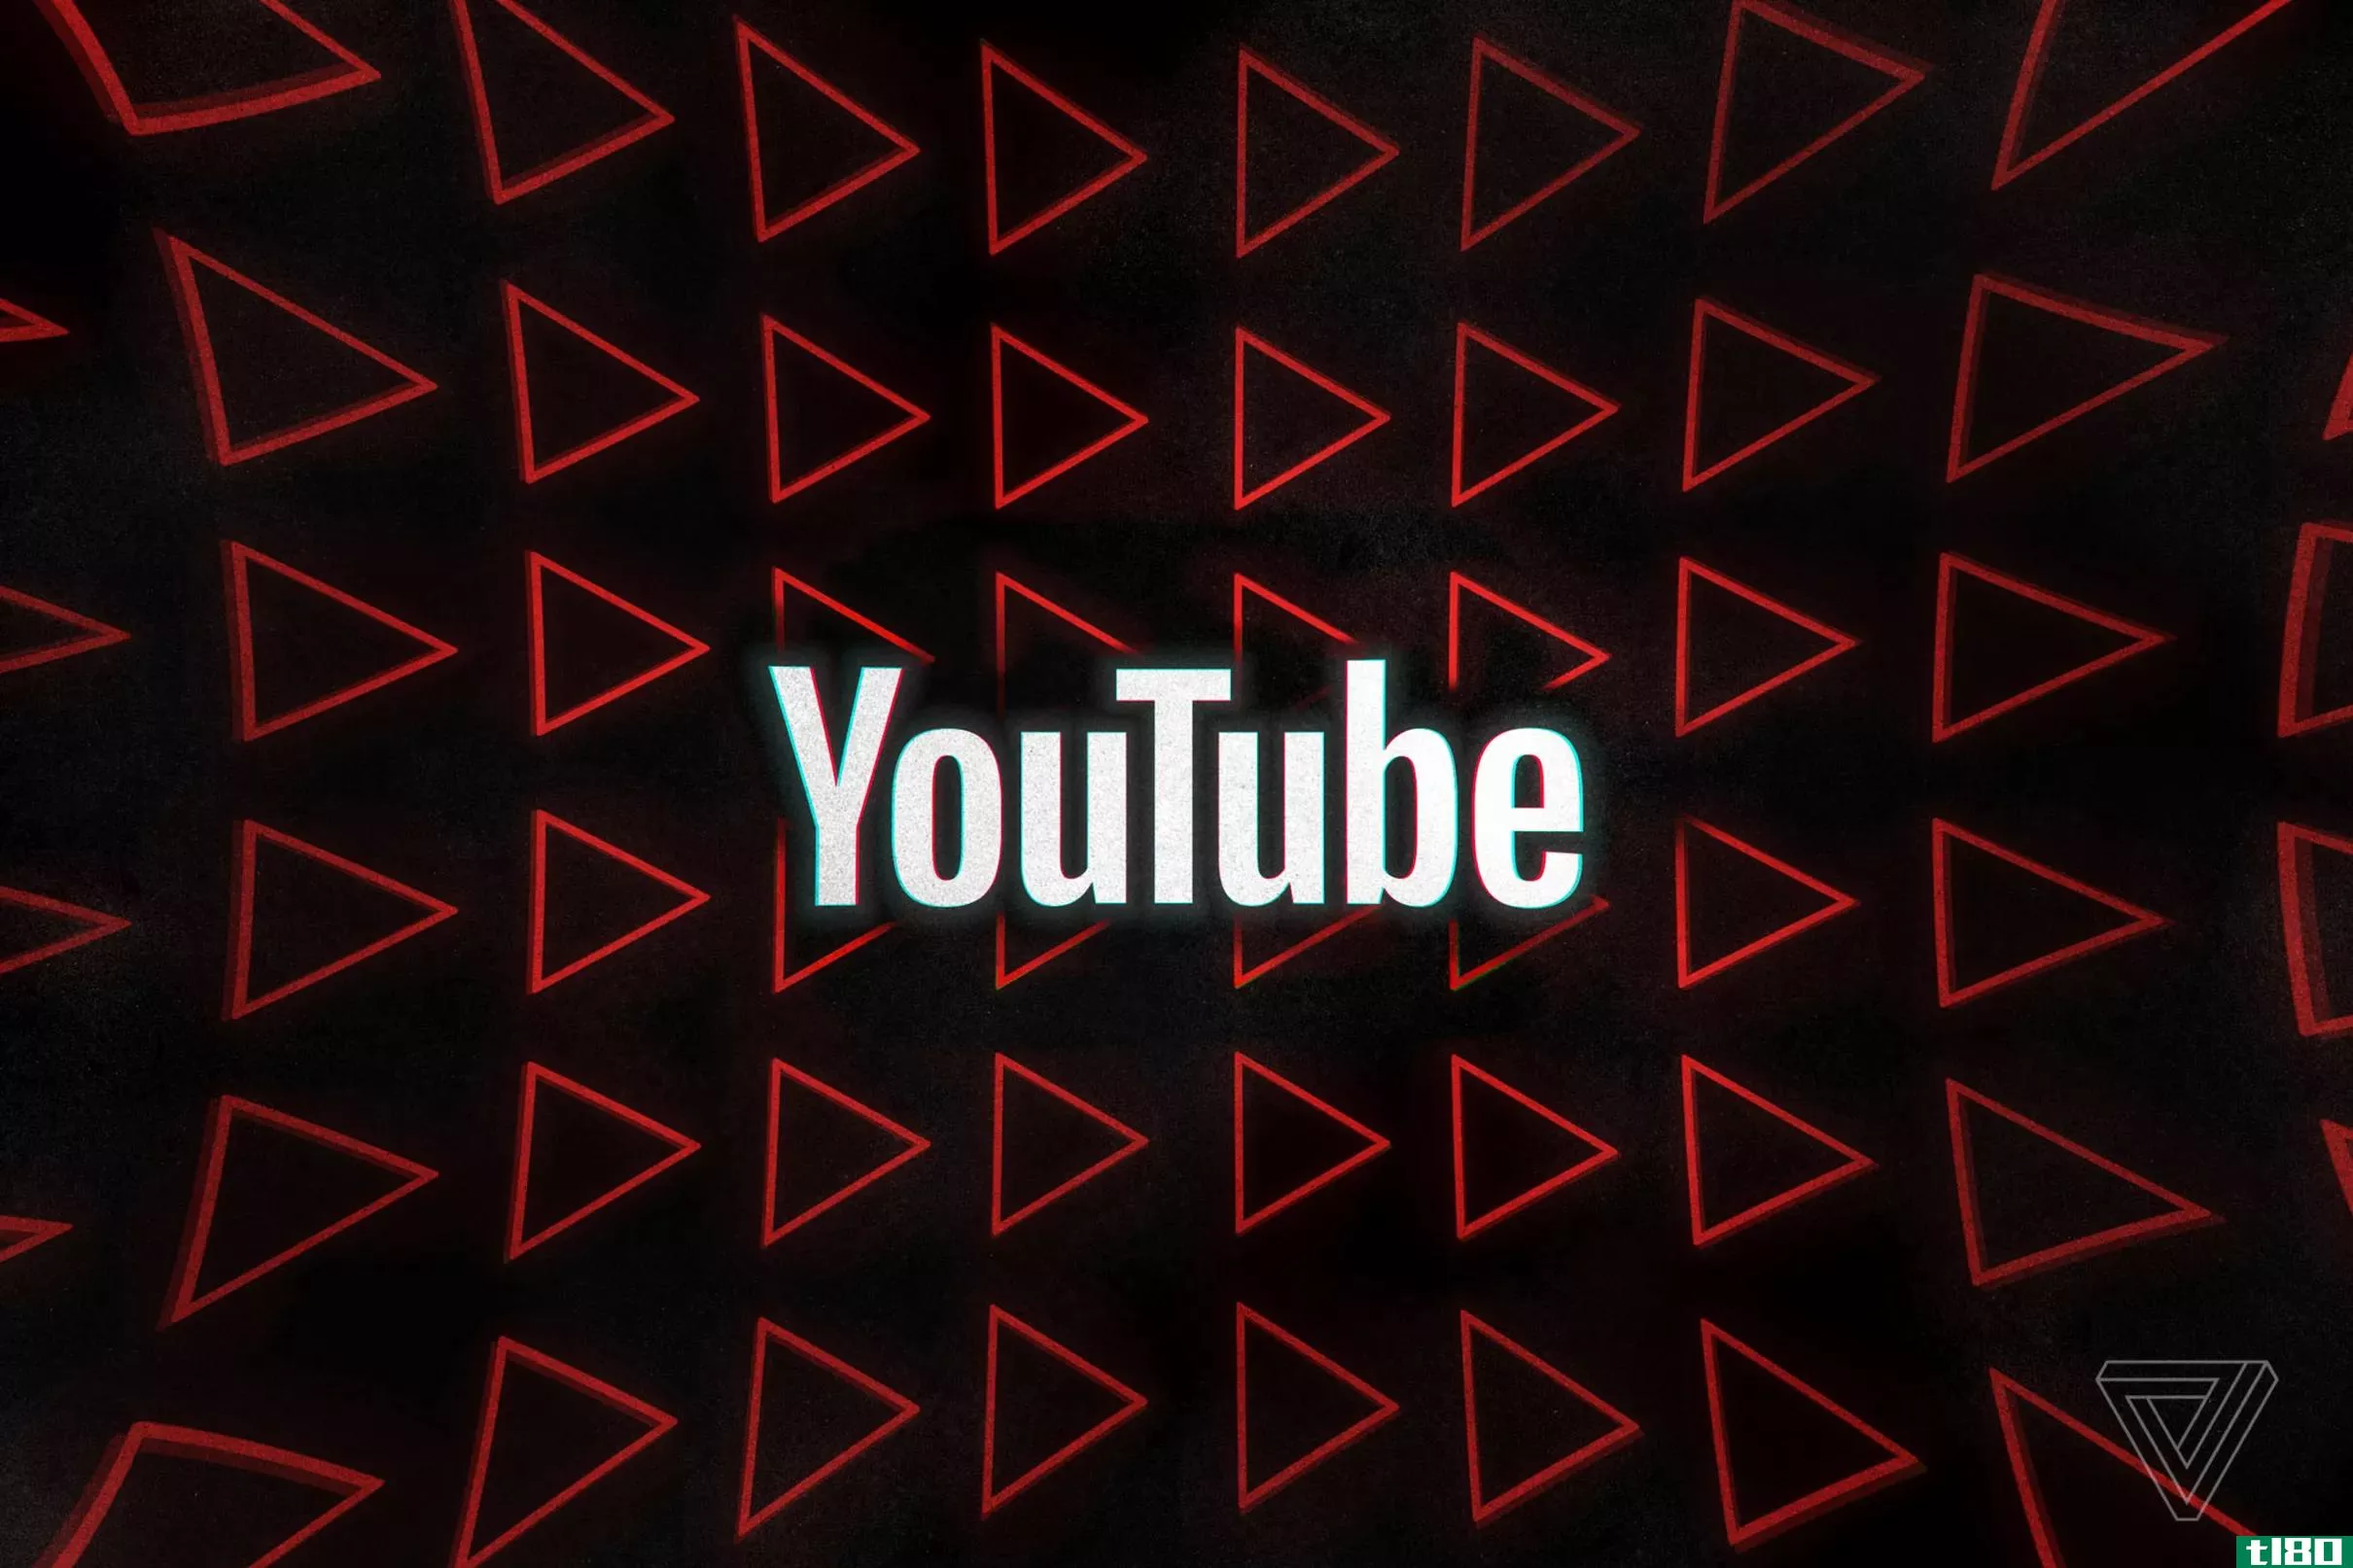 youtube不会禁止qanon内容，但会删除可能助长暴力的视频